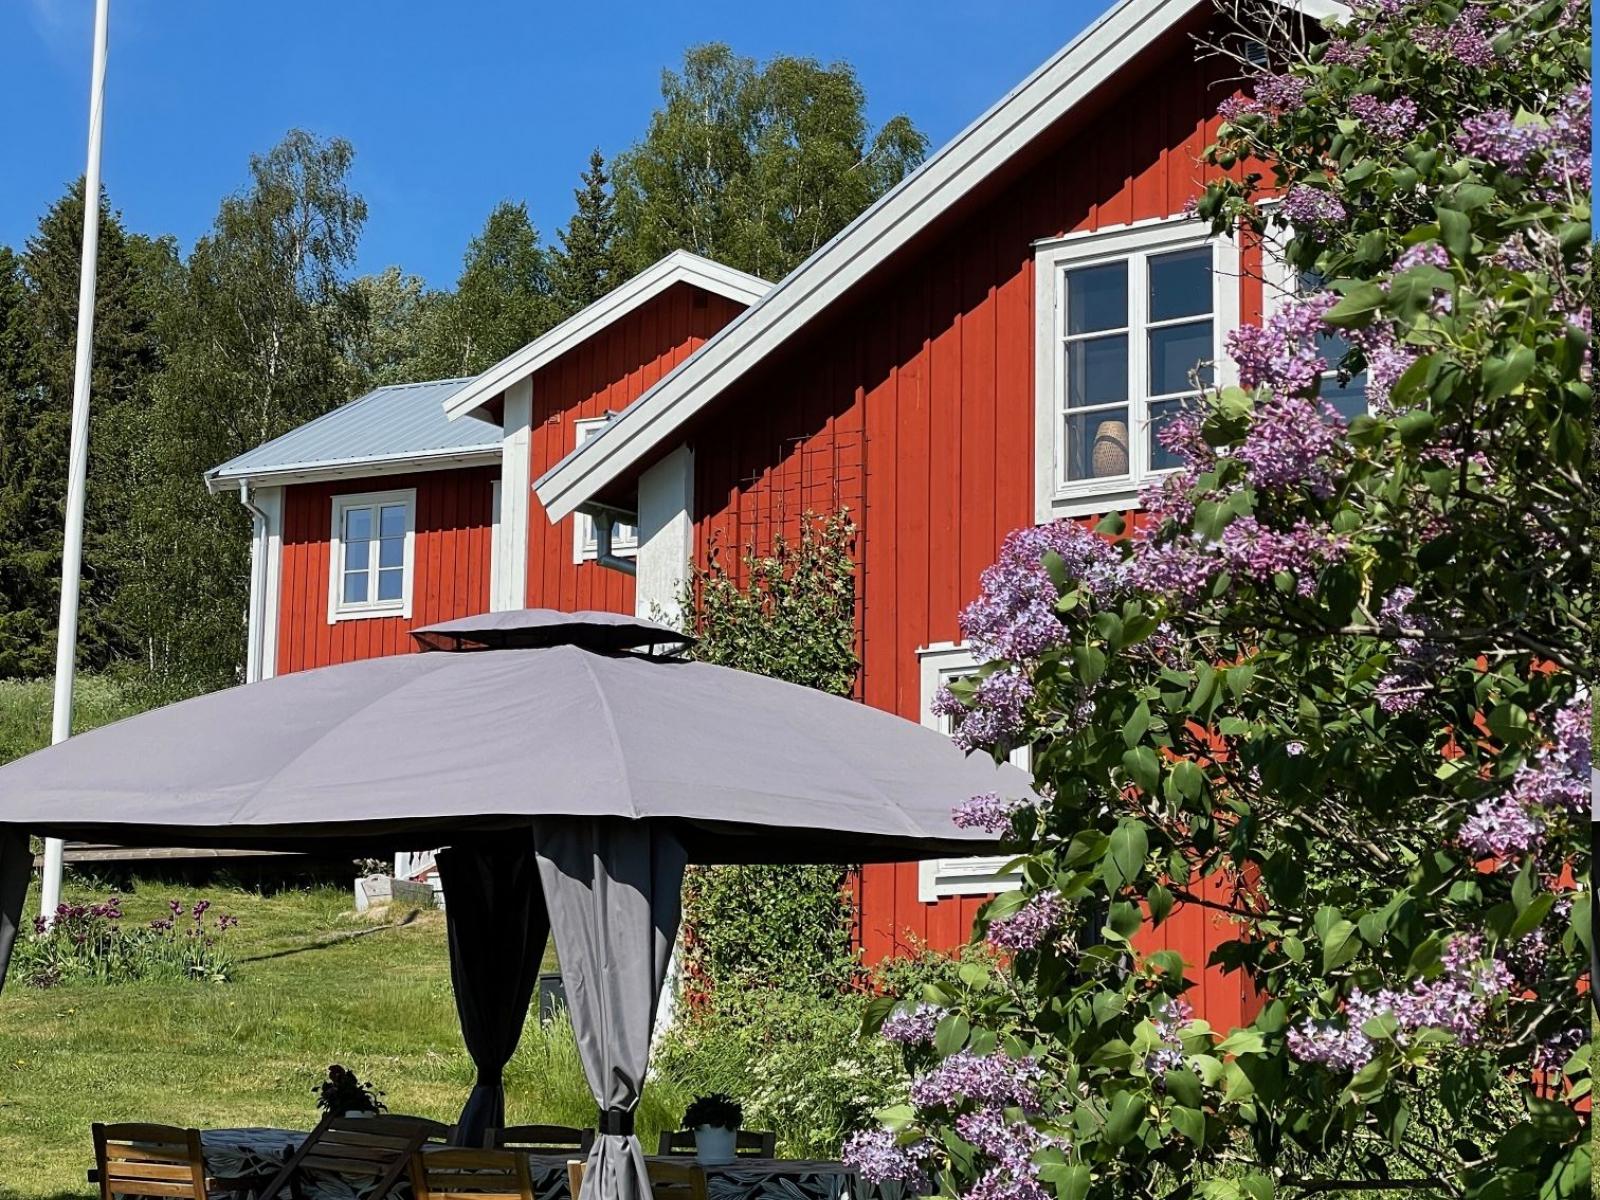 Pelle Åbergsgården in Nordingrå